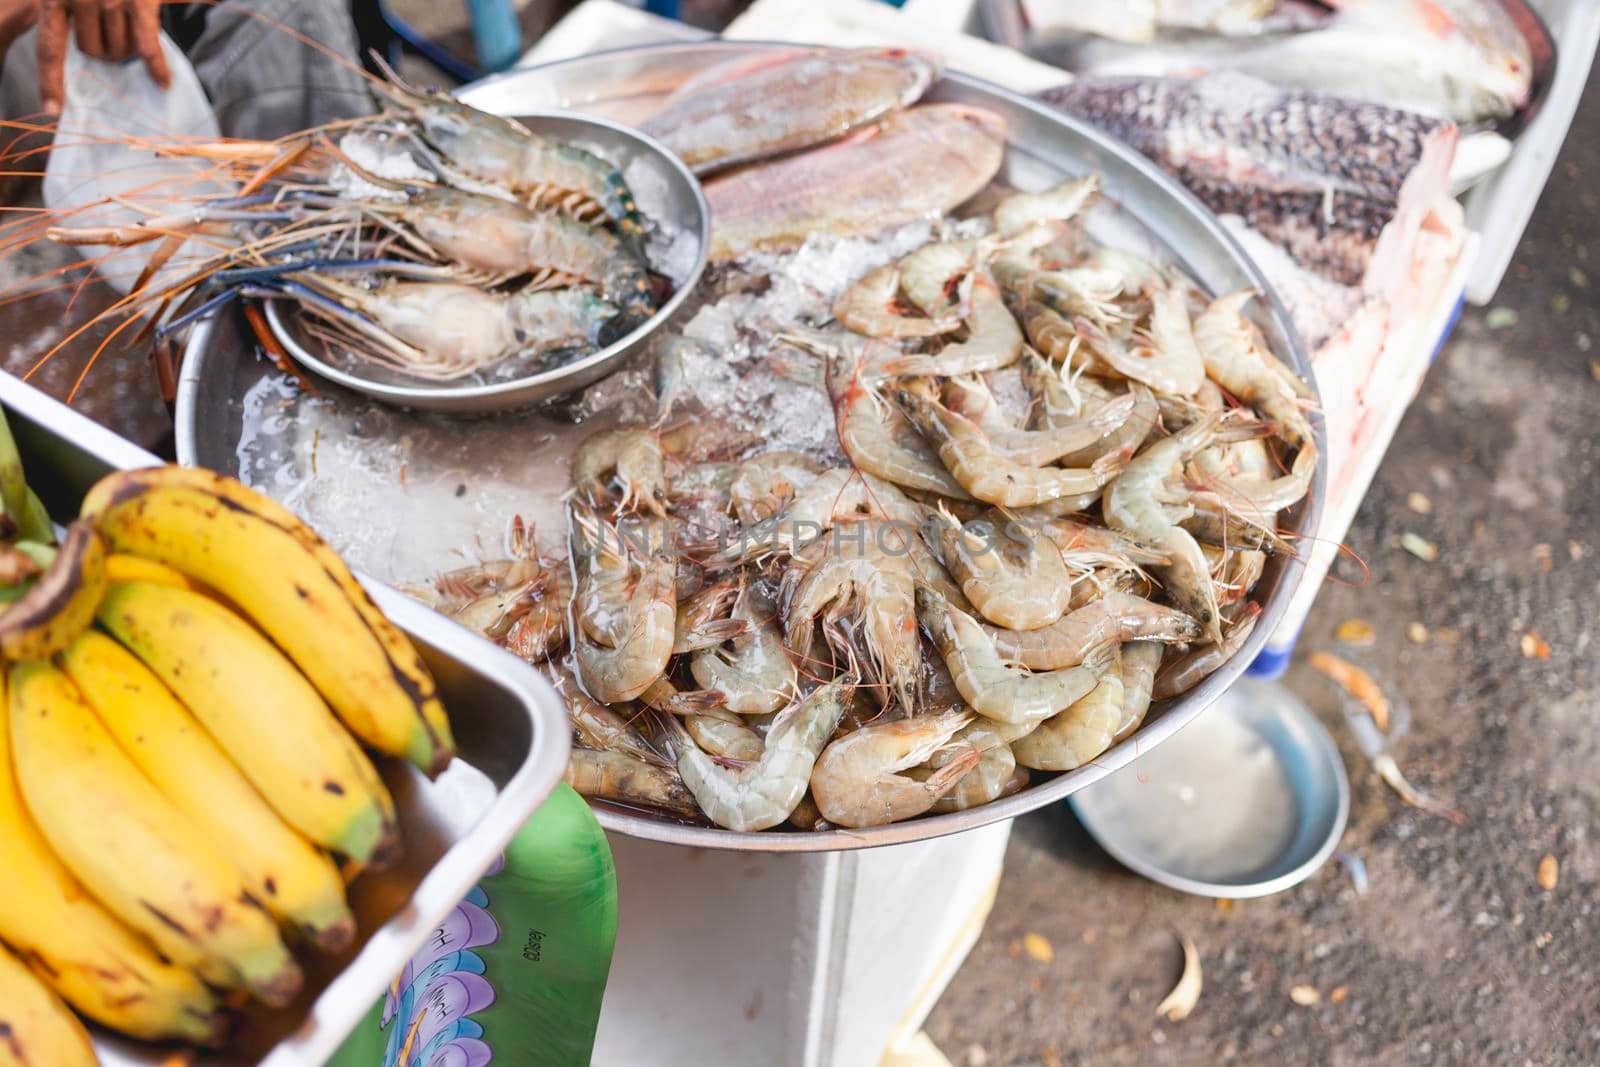 Bananas, fish and shrimps on stall at marketplace. Traditional local fruits and seafood on street market. Bangkok, Thailand. by aksenovko